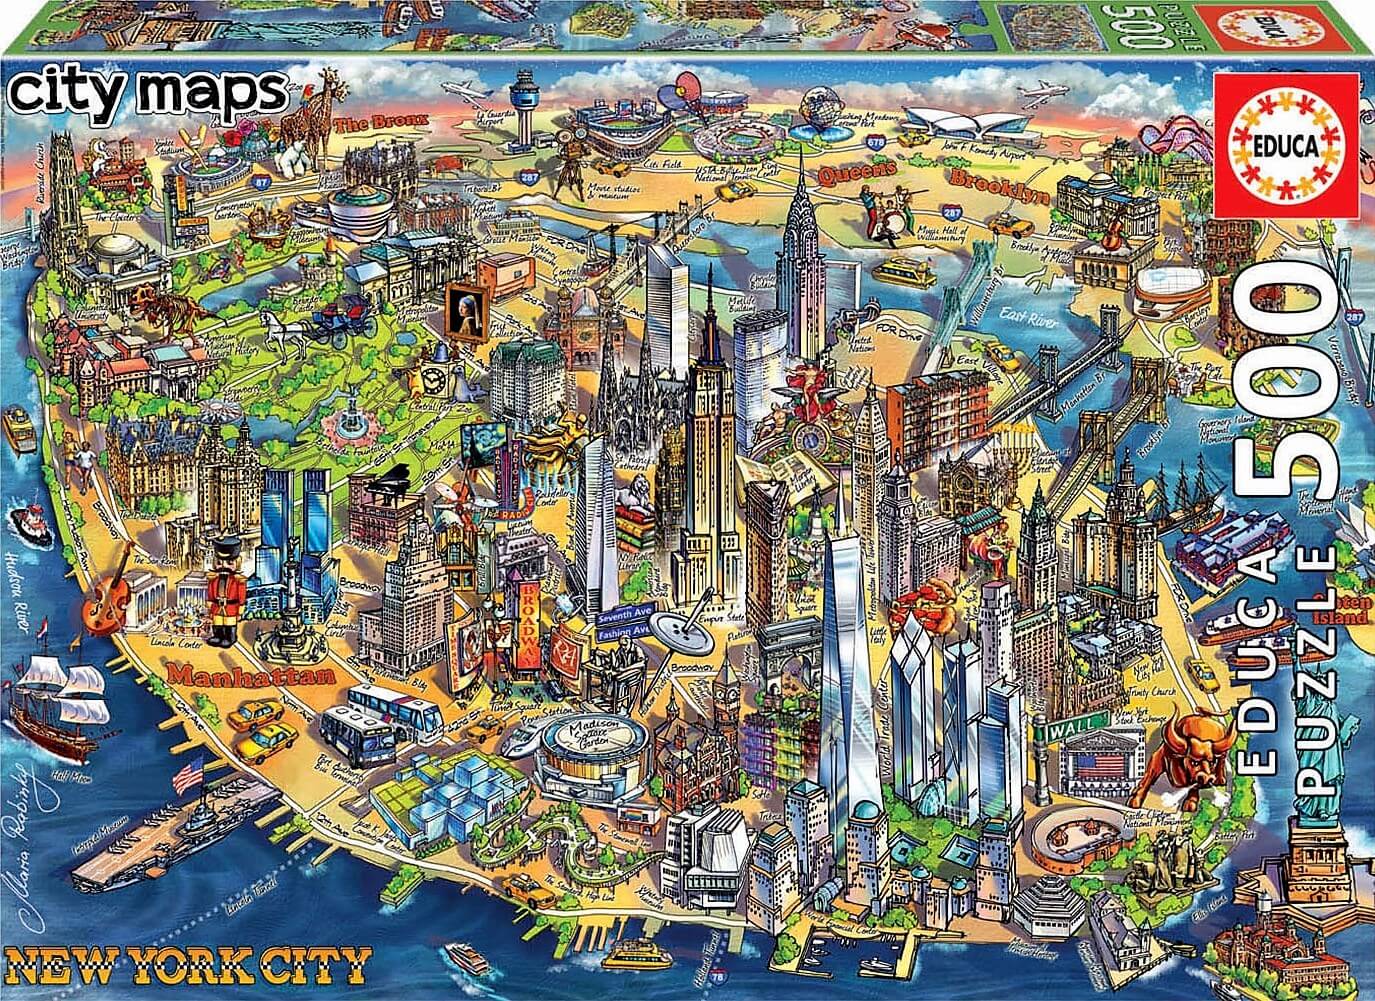 500 Nueva York City Maps